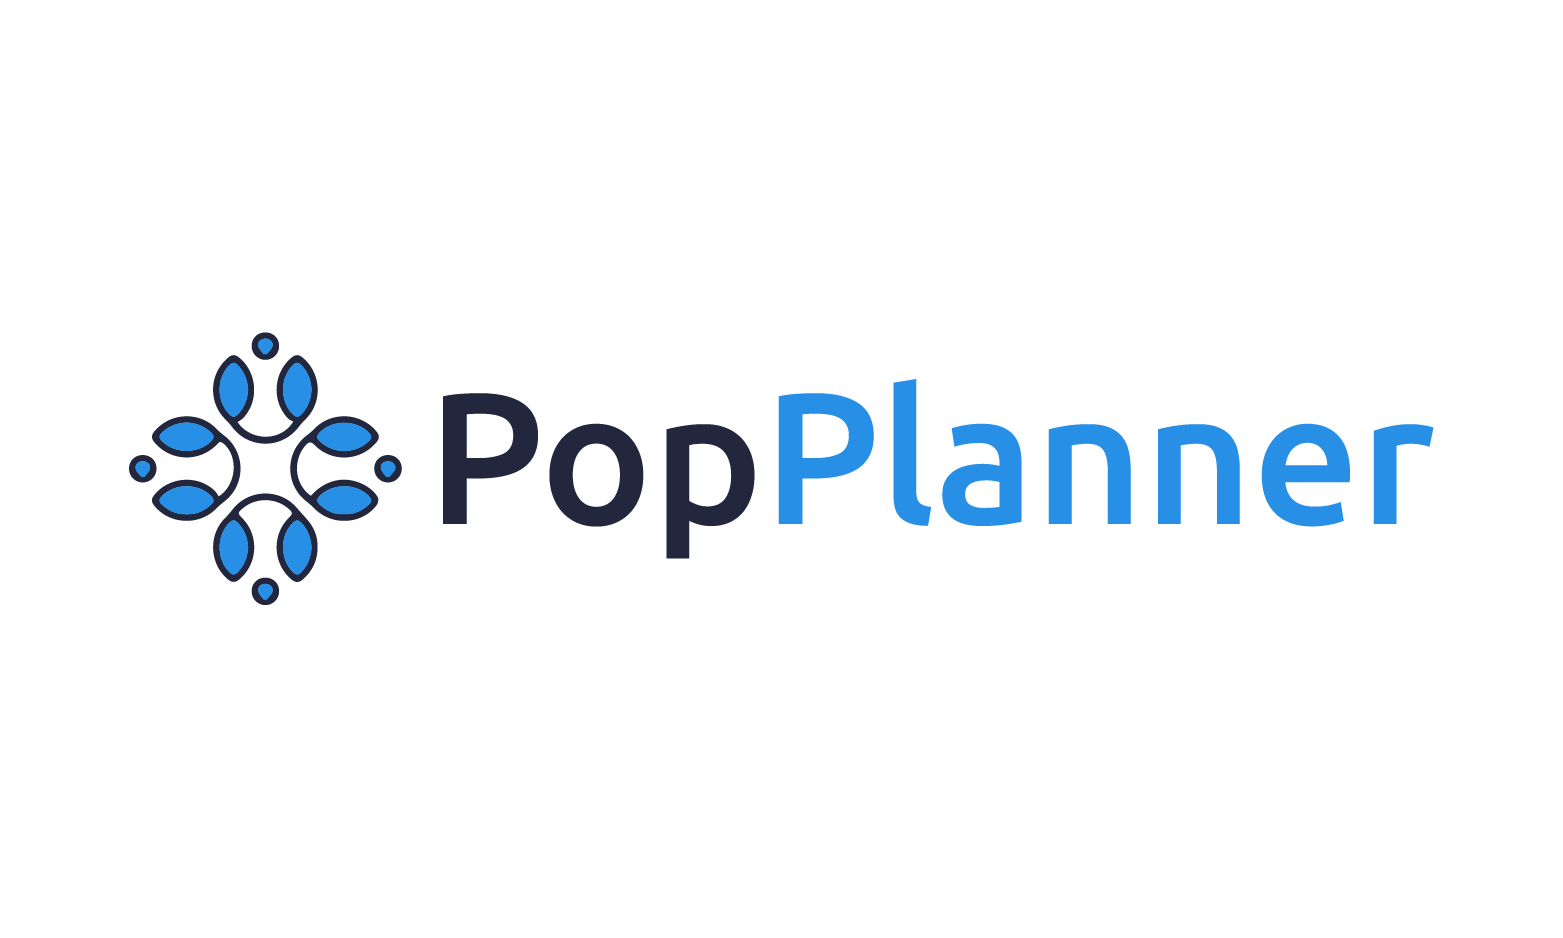 PopPlanner.com - Creative brandable domain for sale